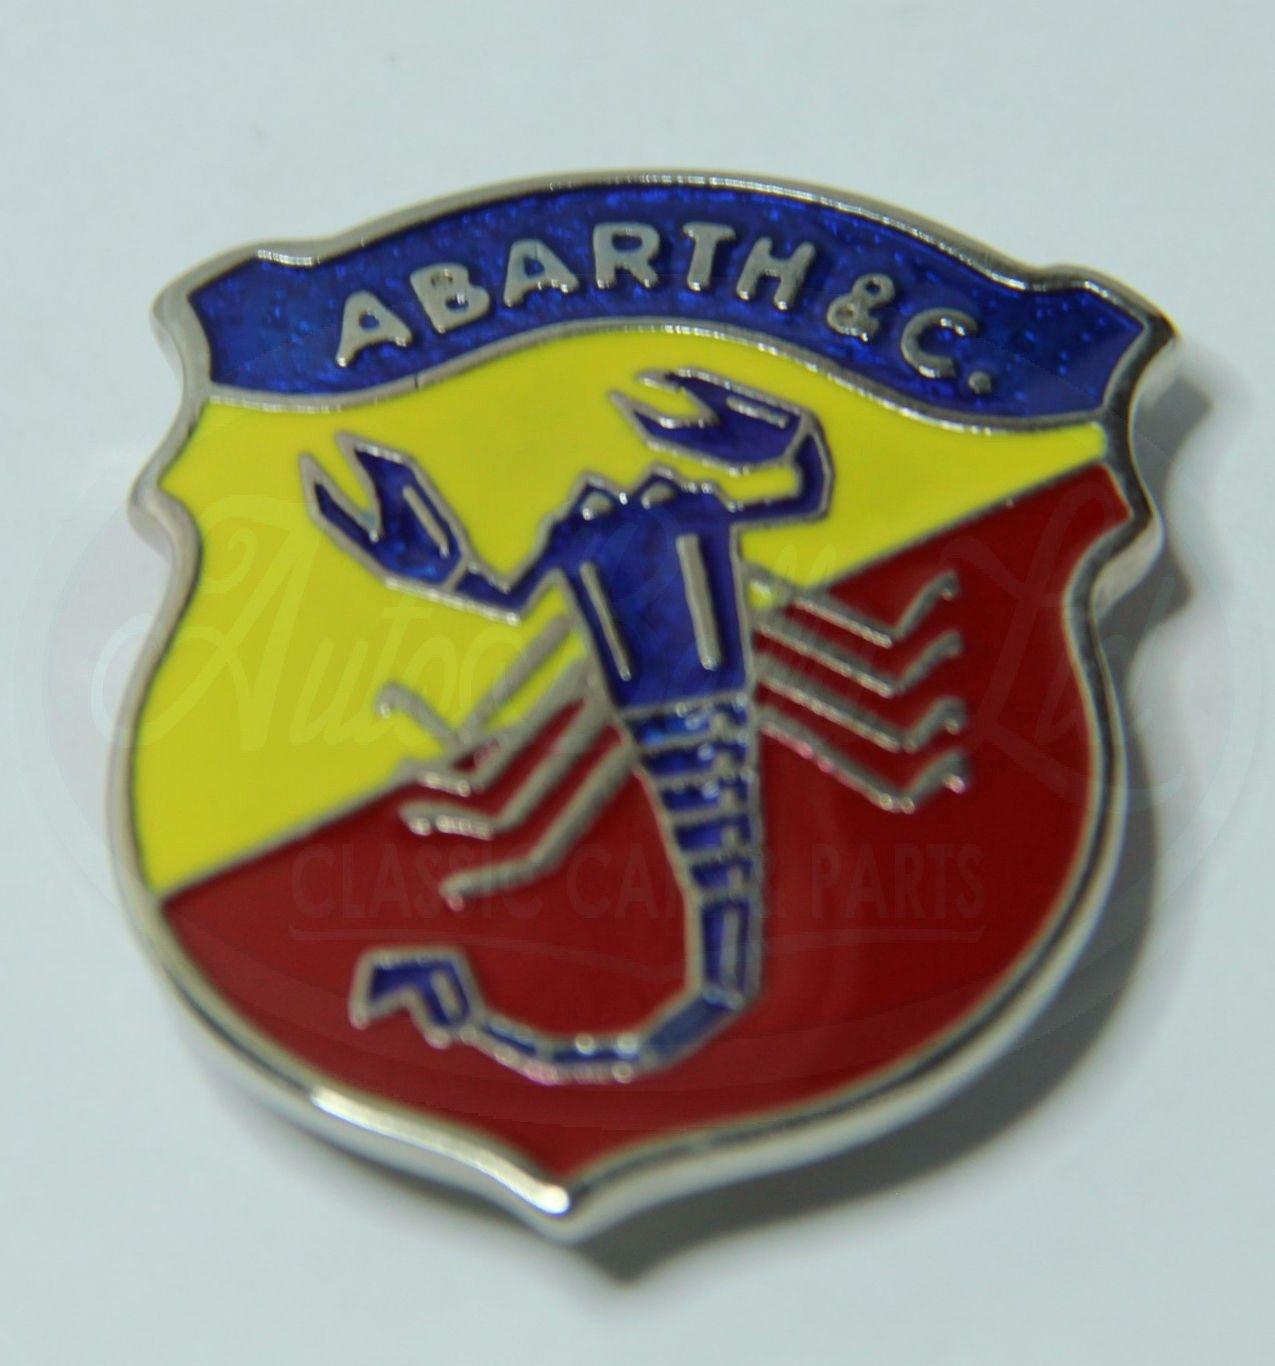 Fiat Abarth Logo - CLASSIC VINTAGE FIAT ABARTH SIDE LOGO EMBLEM LACQUERED METAL BADGE